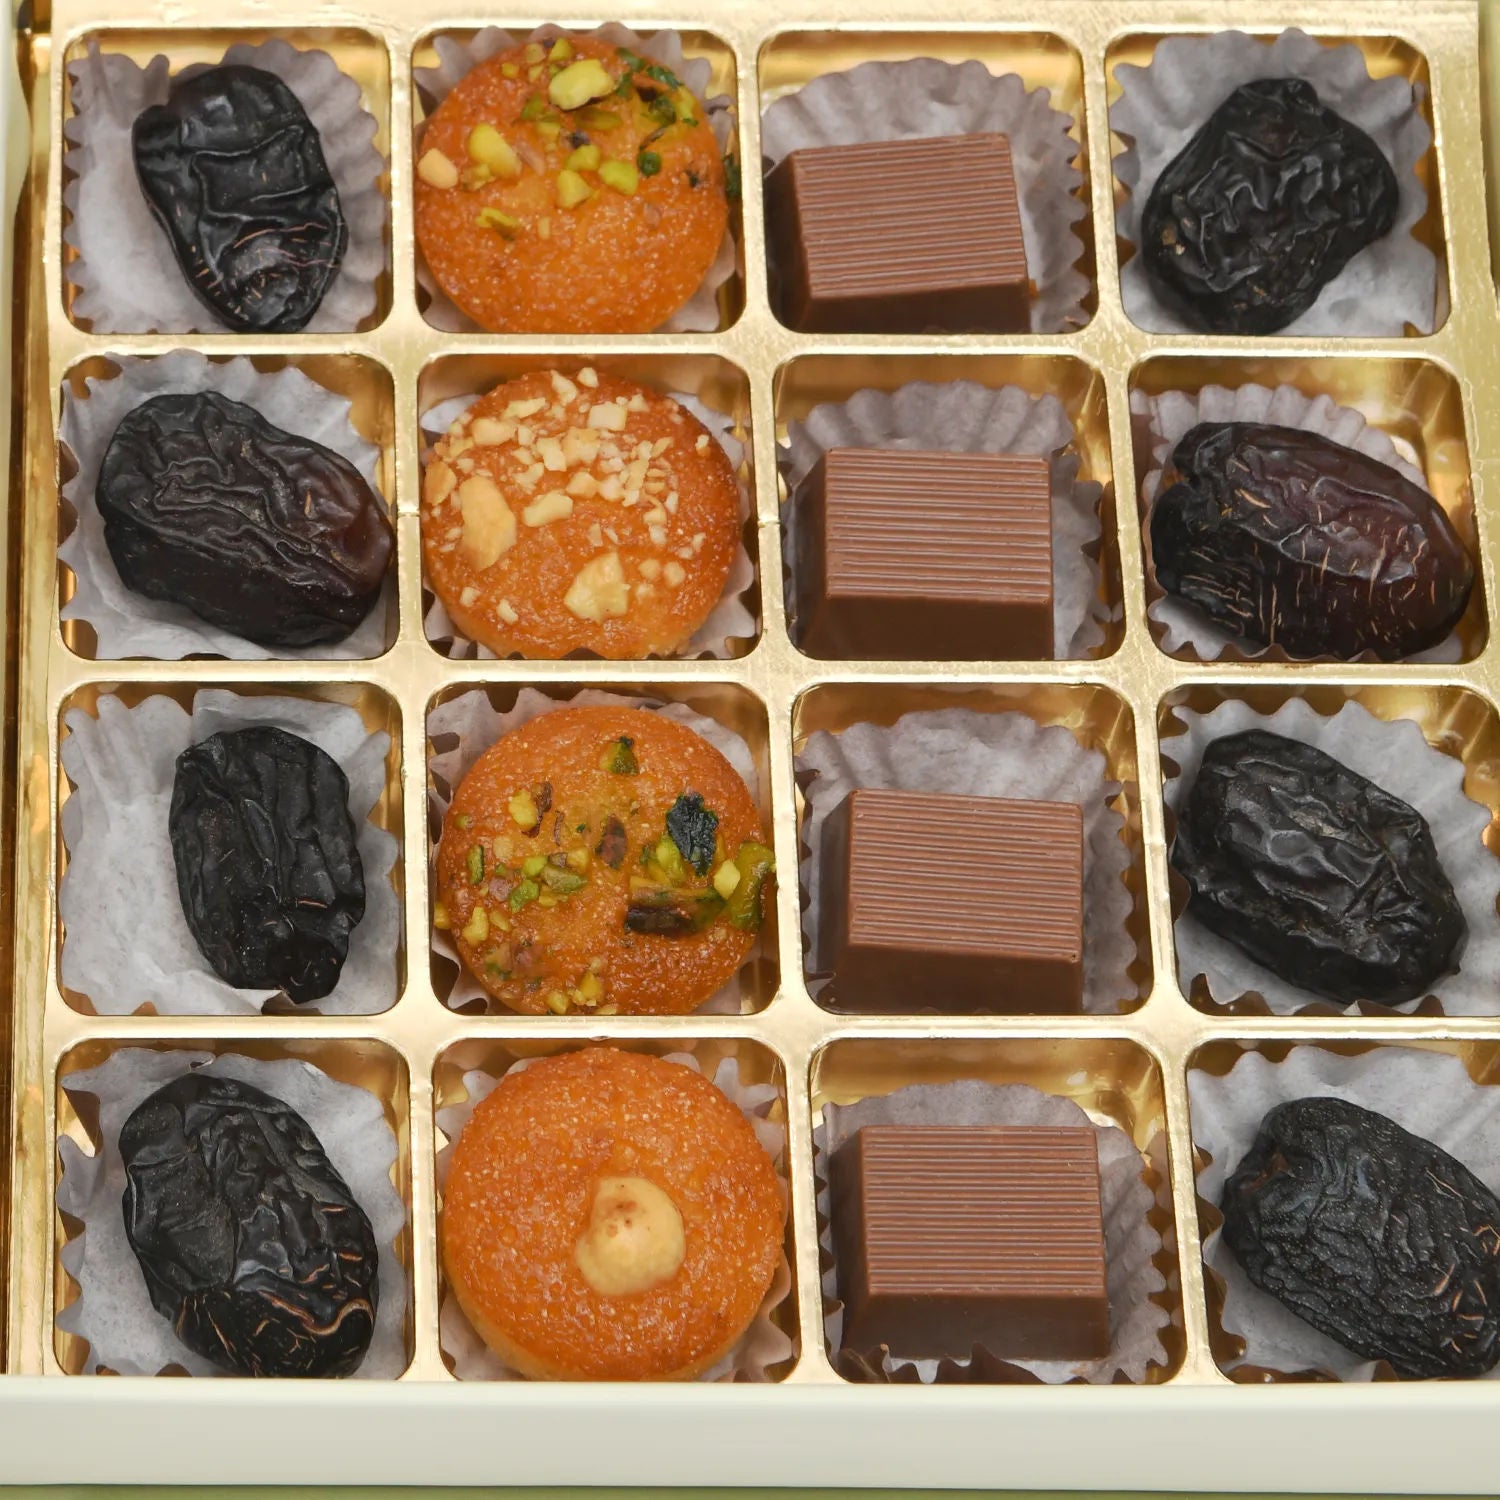 Premium Box of Assorted Arabic Sweets